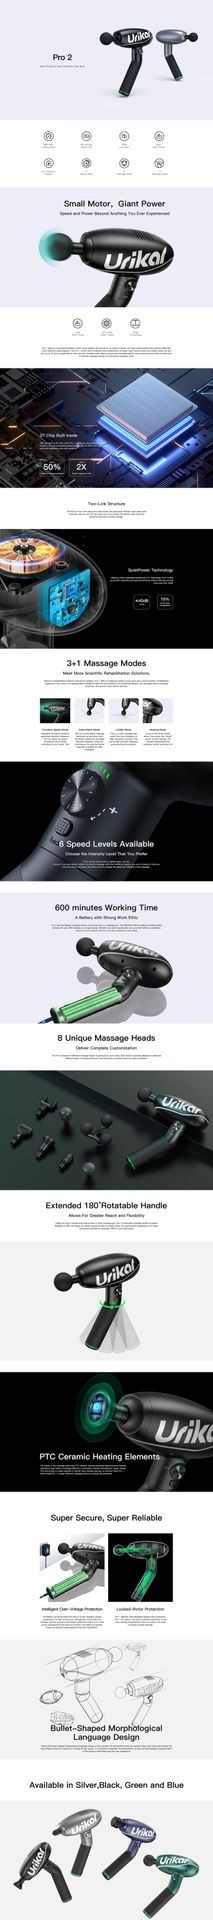 Urikar Pro 2 Heated Deep Tissue Muscle Massage Gun with Rotating Handle